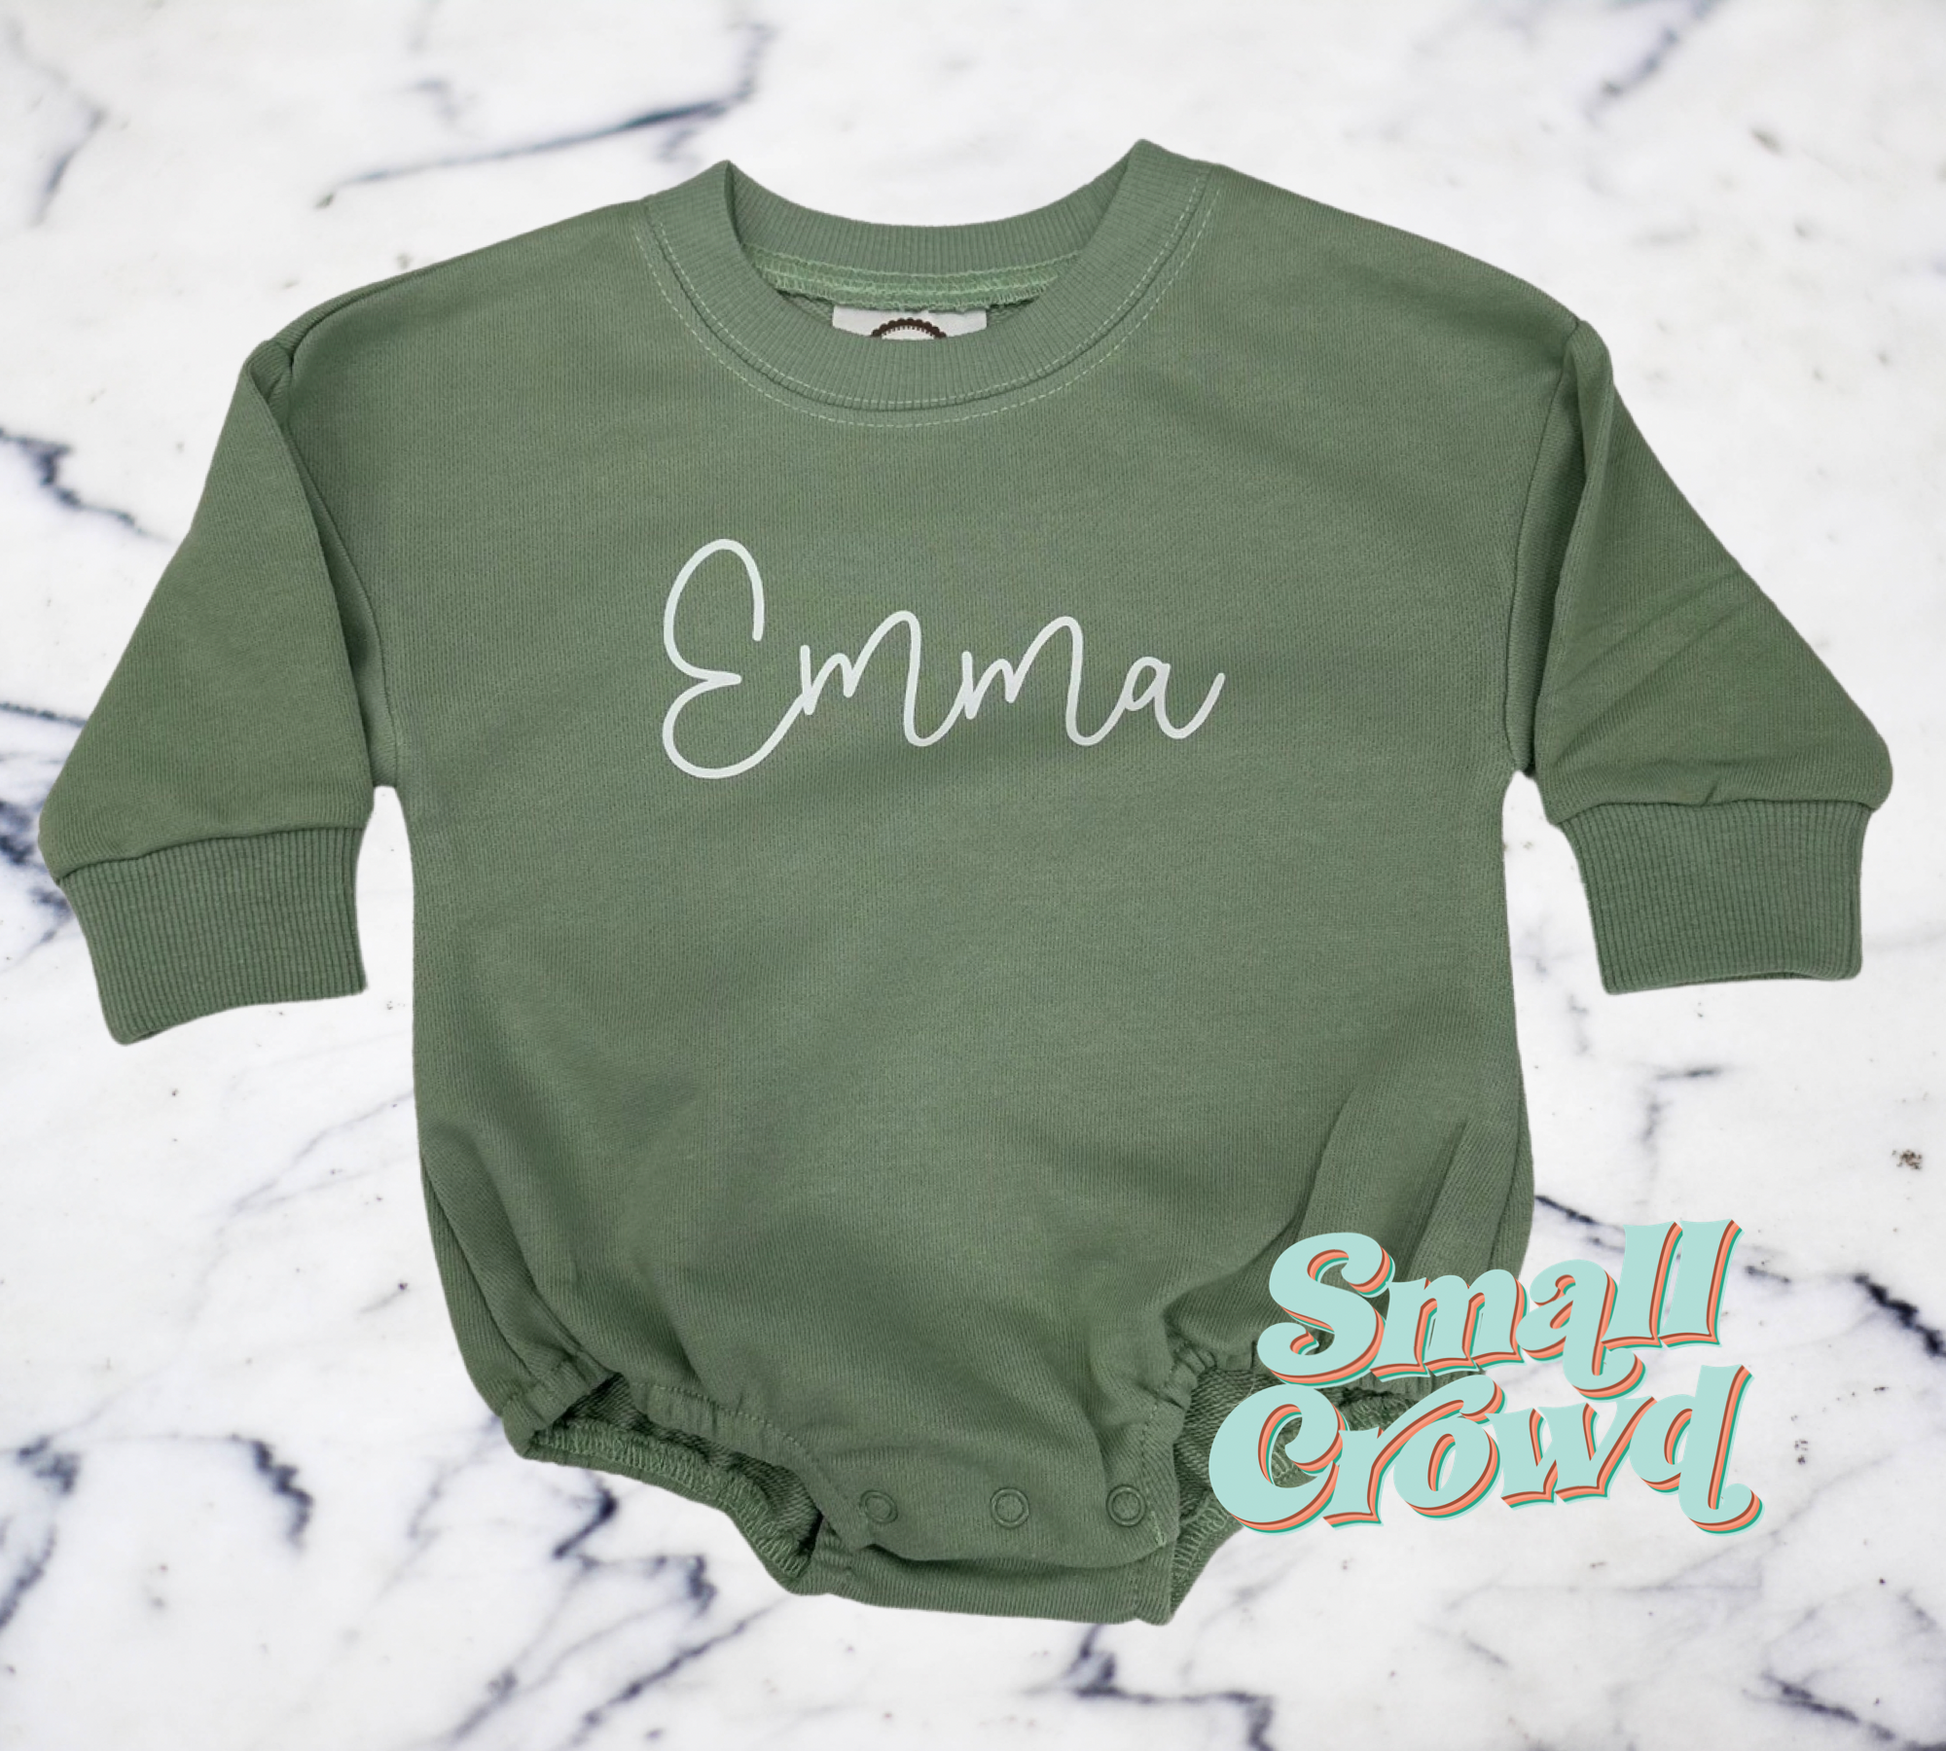 - pastel Name green – Bubble Script Sweatshirt Small Crowd